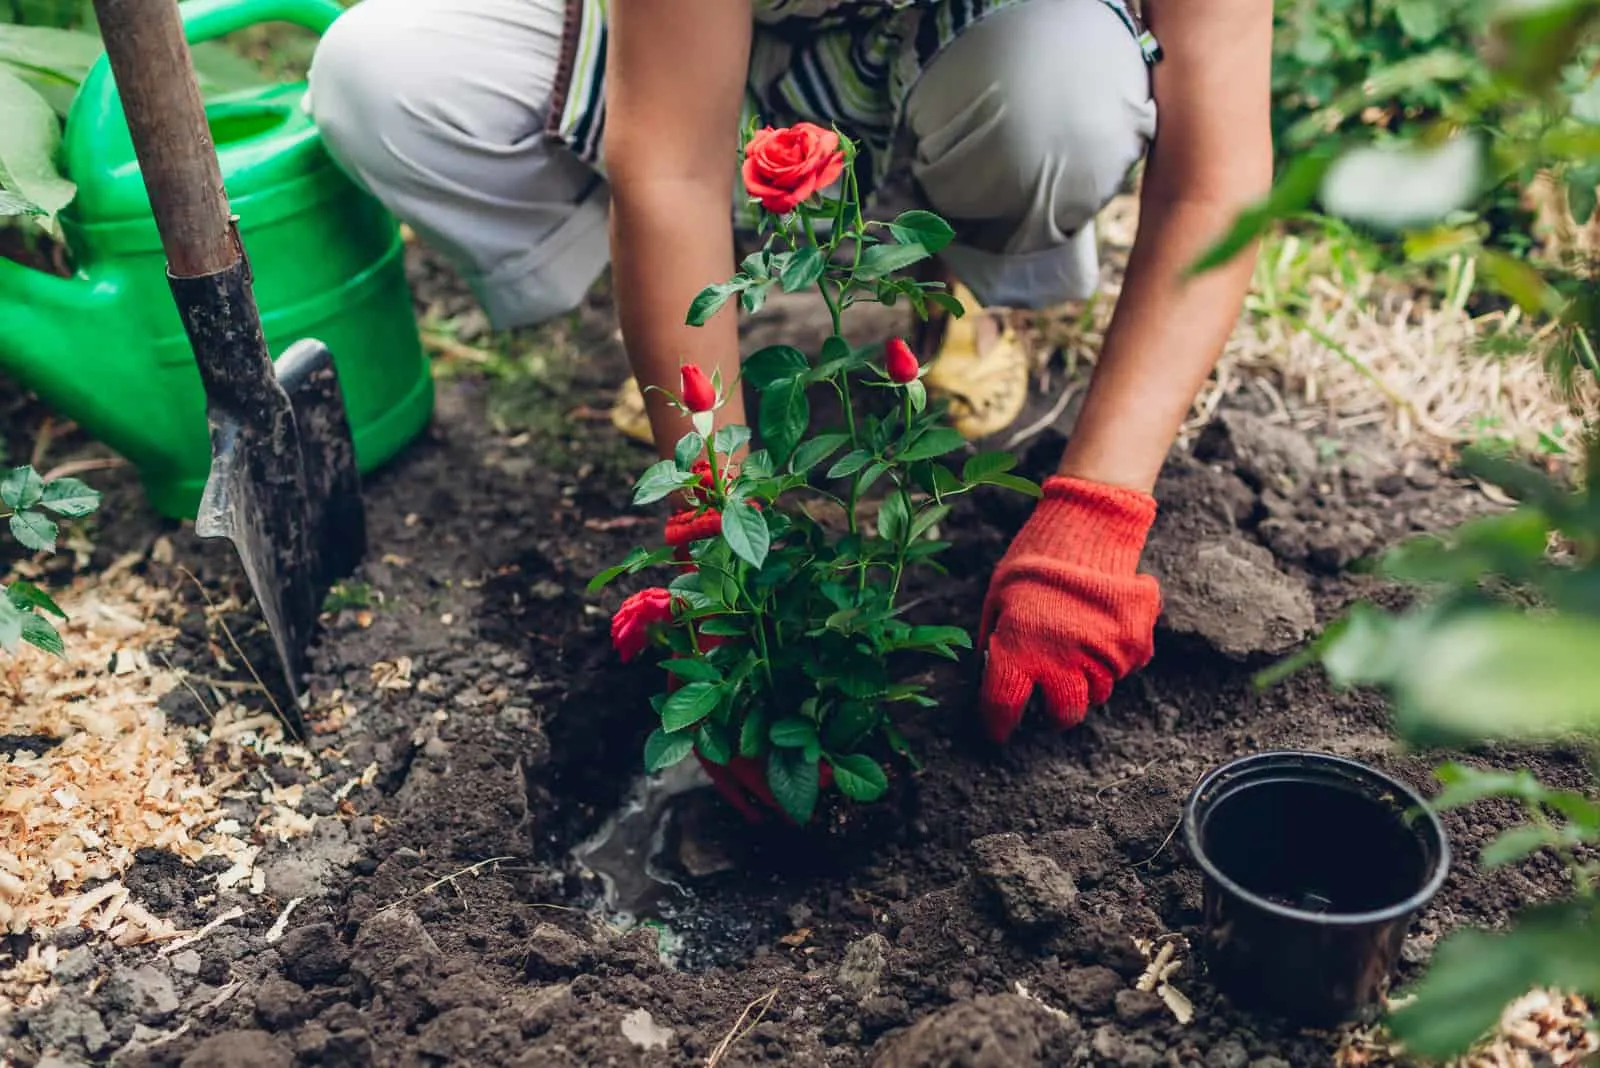 Woman gardener transplanting red roses flowers from pot into wet soil